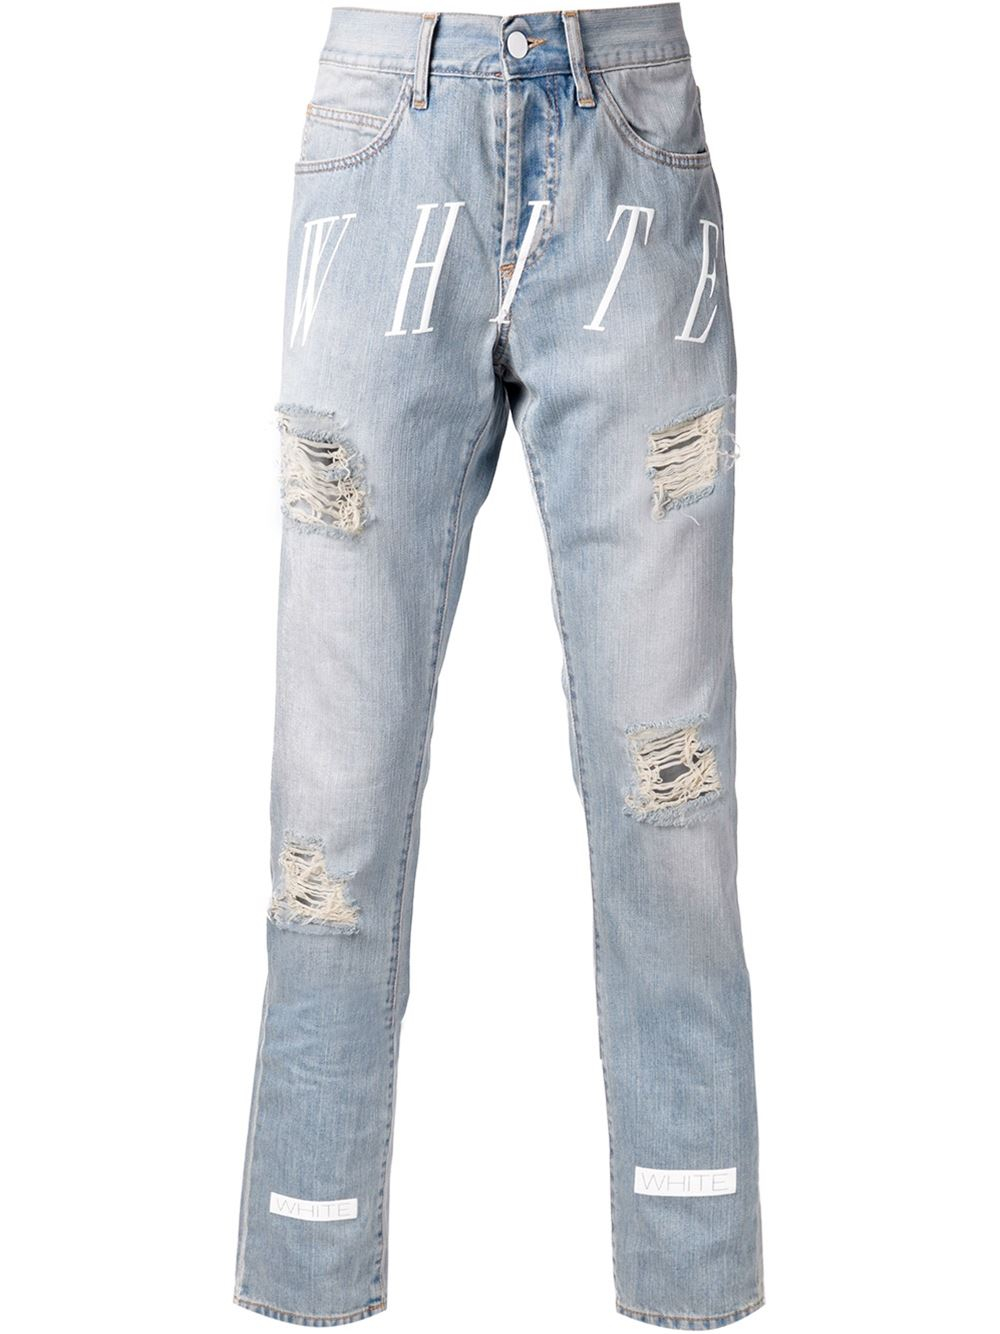 Stige ovn svamp Off-White c/o Virgil Abloh Distressed Striped Jeans in Blue for Men | Lyst